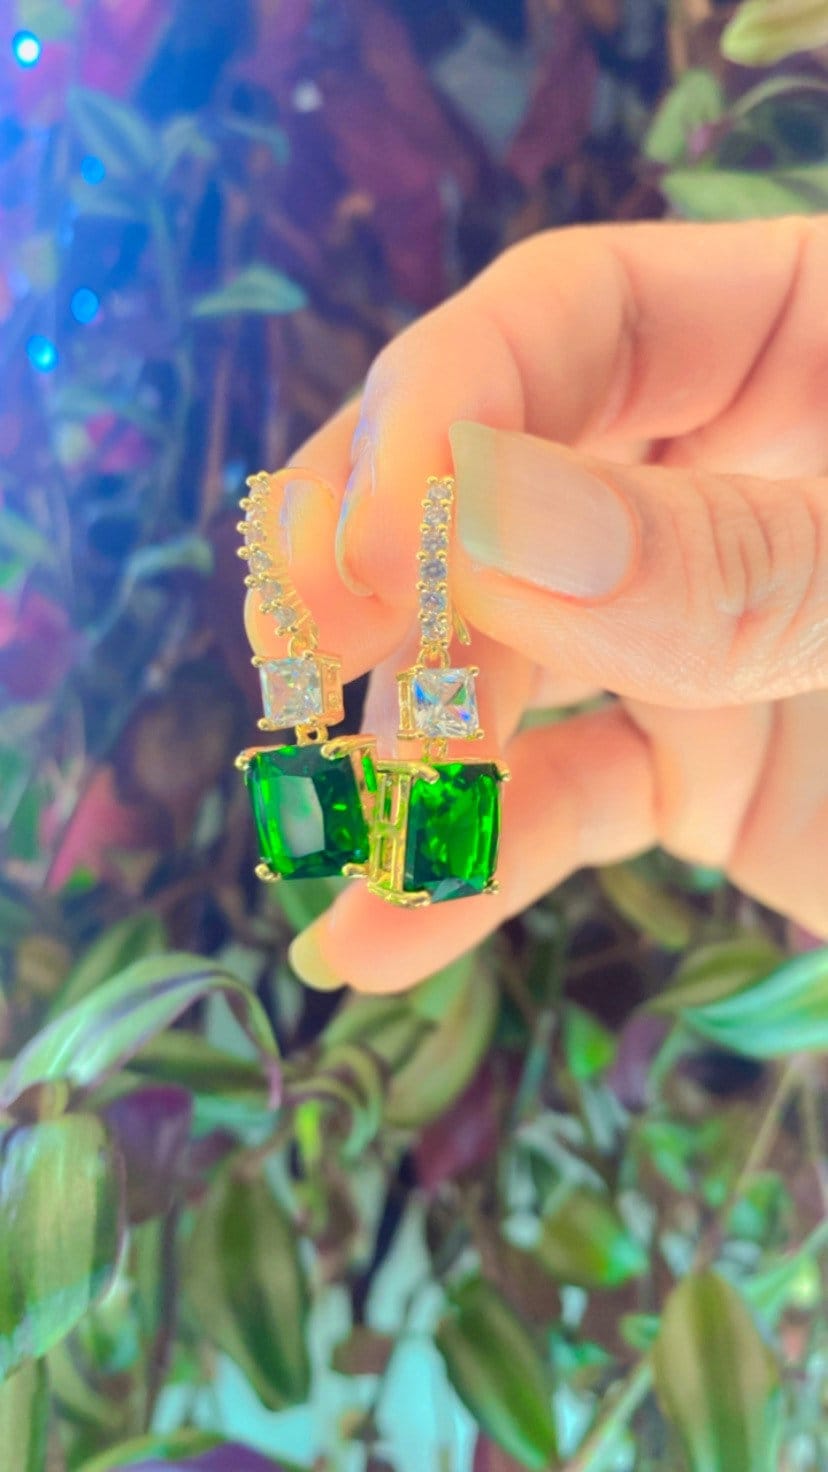 Emerald Green Drop Earrings Emerald Birthstone Earrings Wedding gift for mom of bride Wedding jewelry green crystal earrings